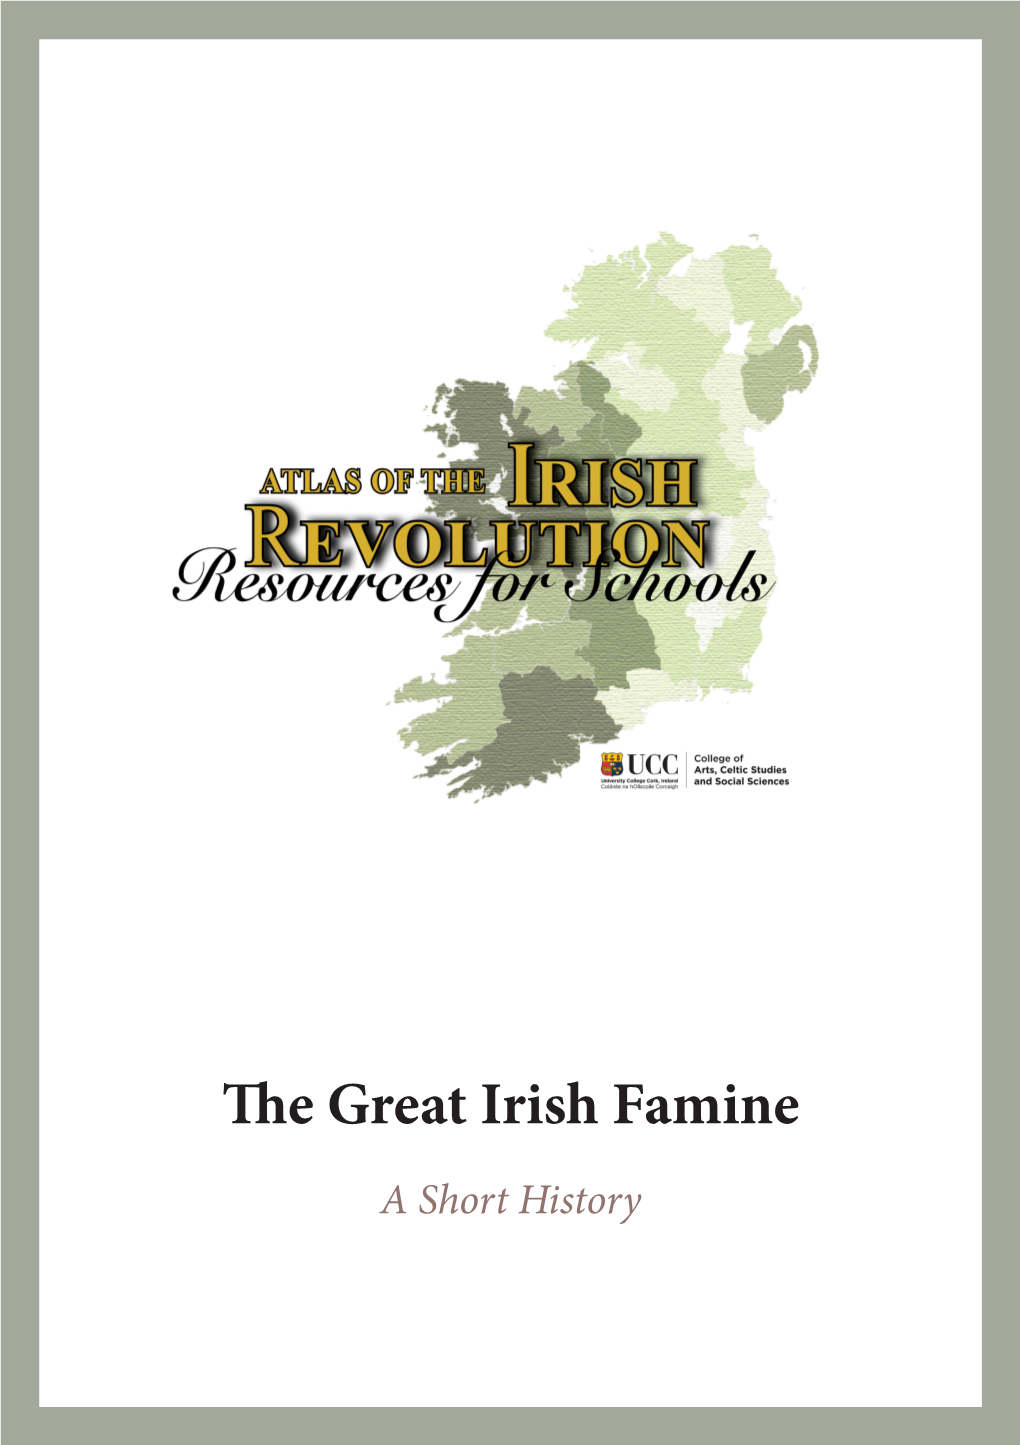 A Short History of the Great Irish Famine